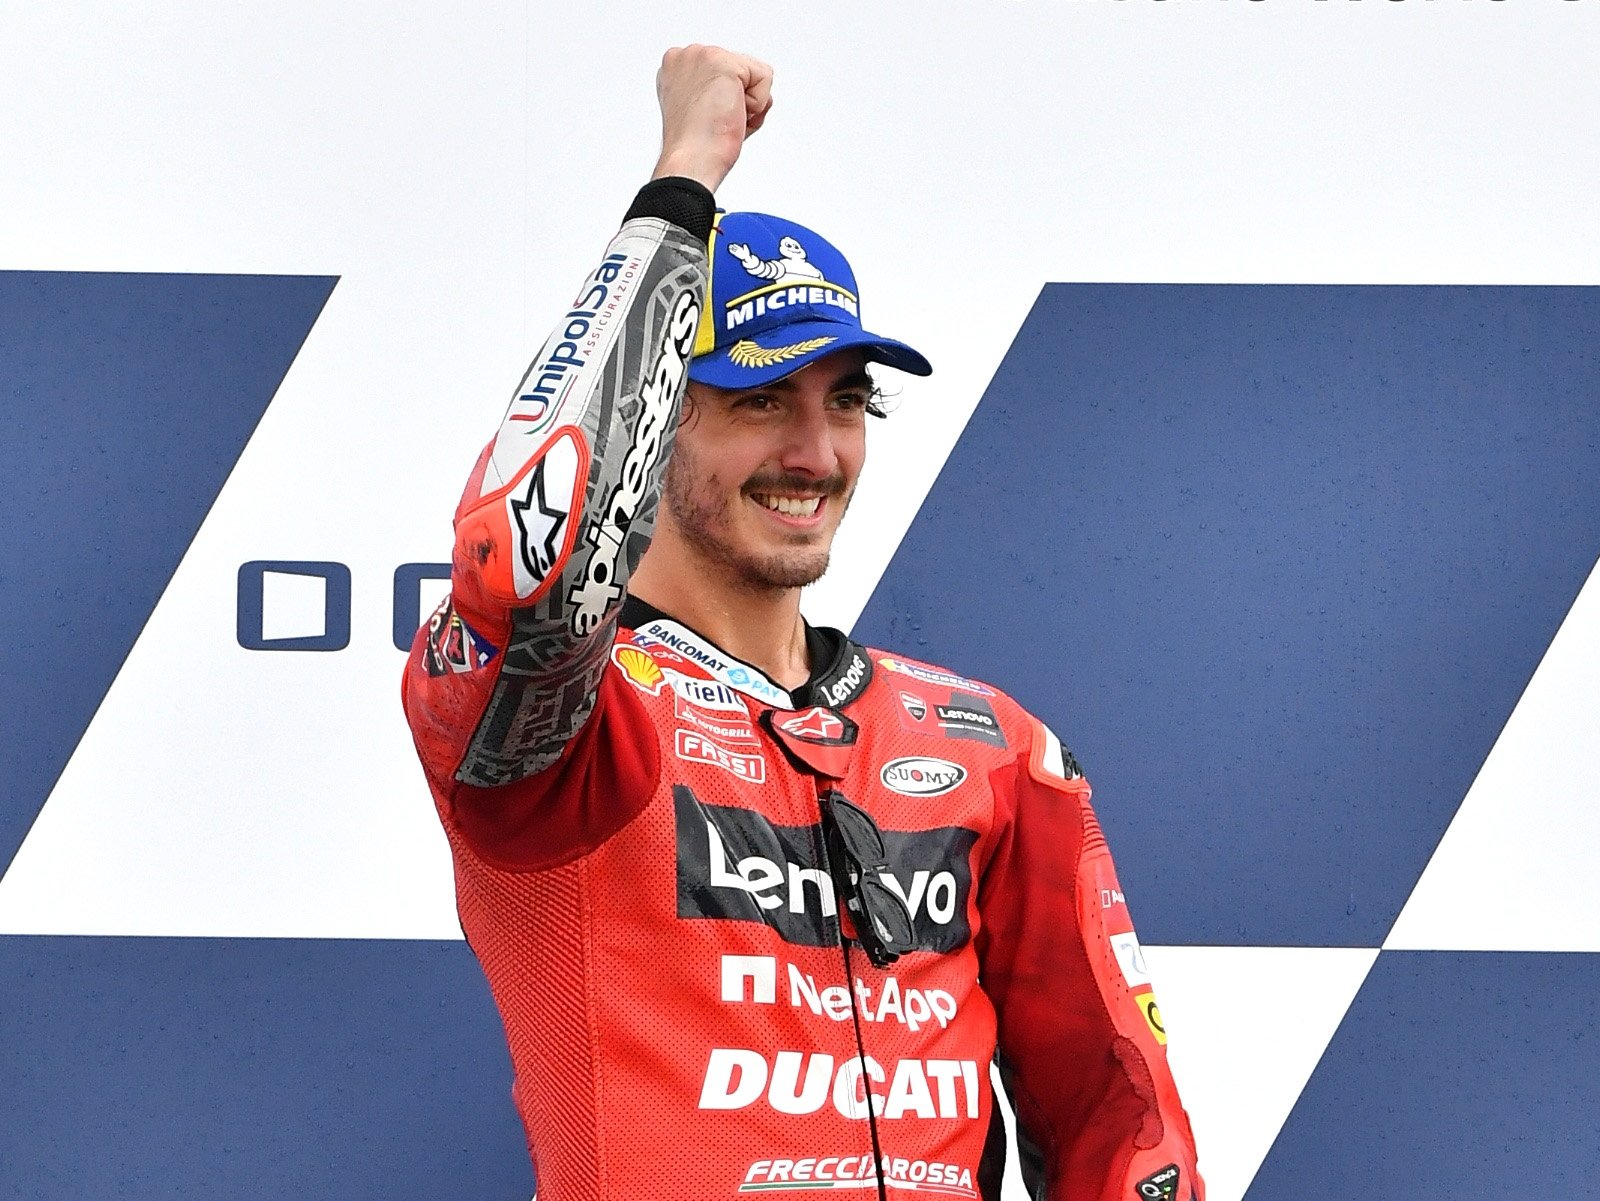 Ducati's Francesco Bagnaia celebrates winning the San Marino MotoGP, Misano, Italy, Sept. 19, 2021.